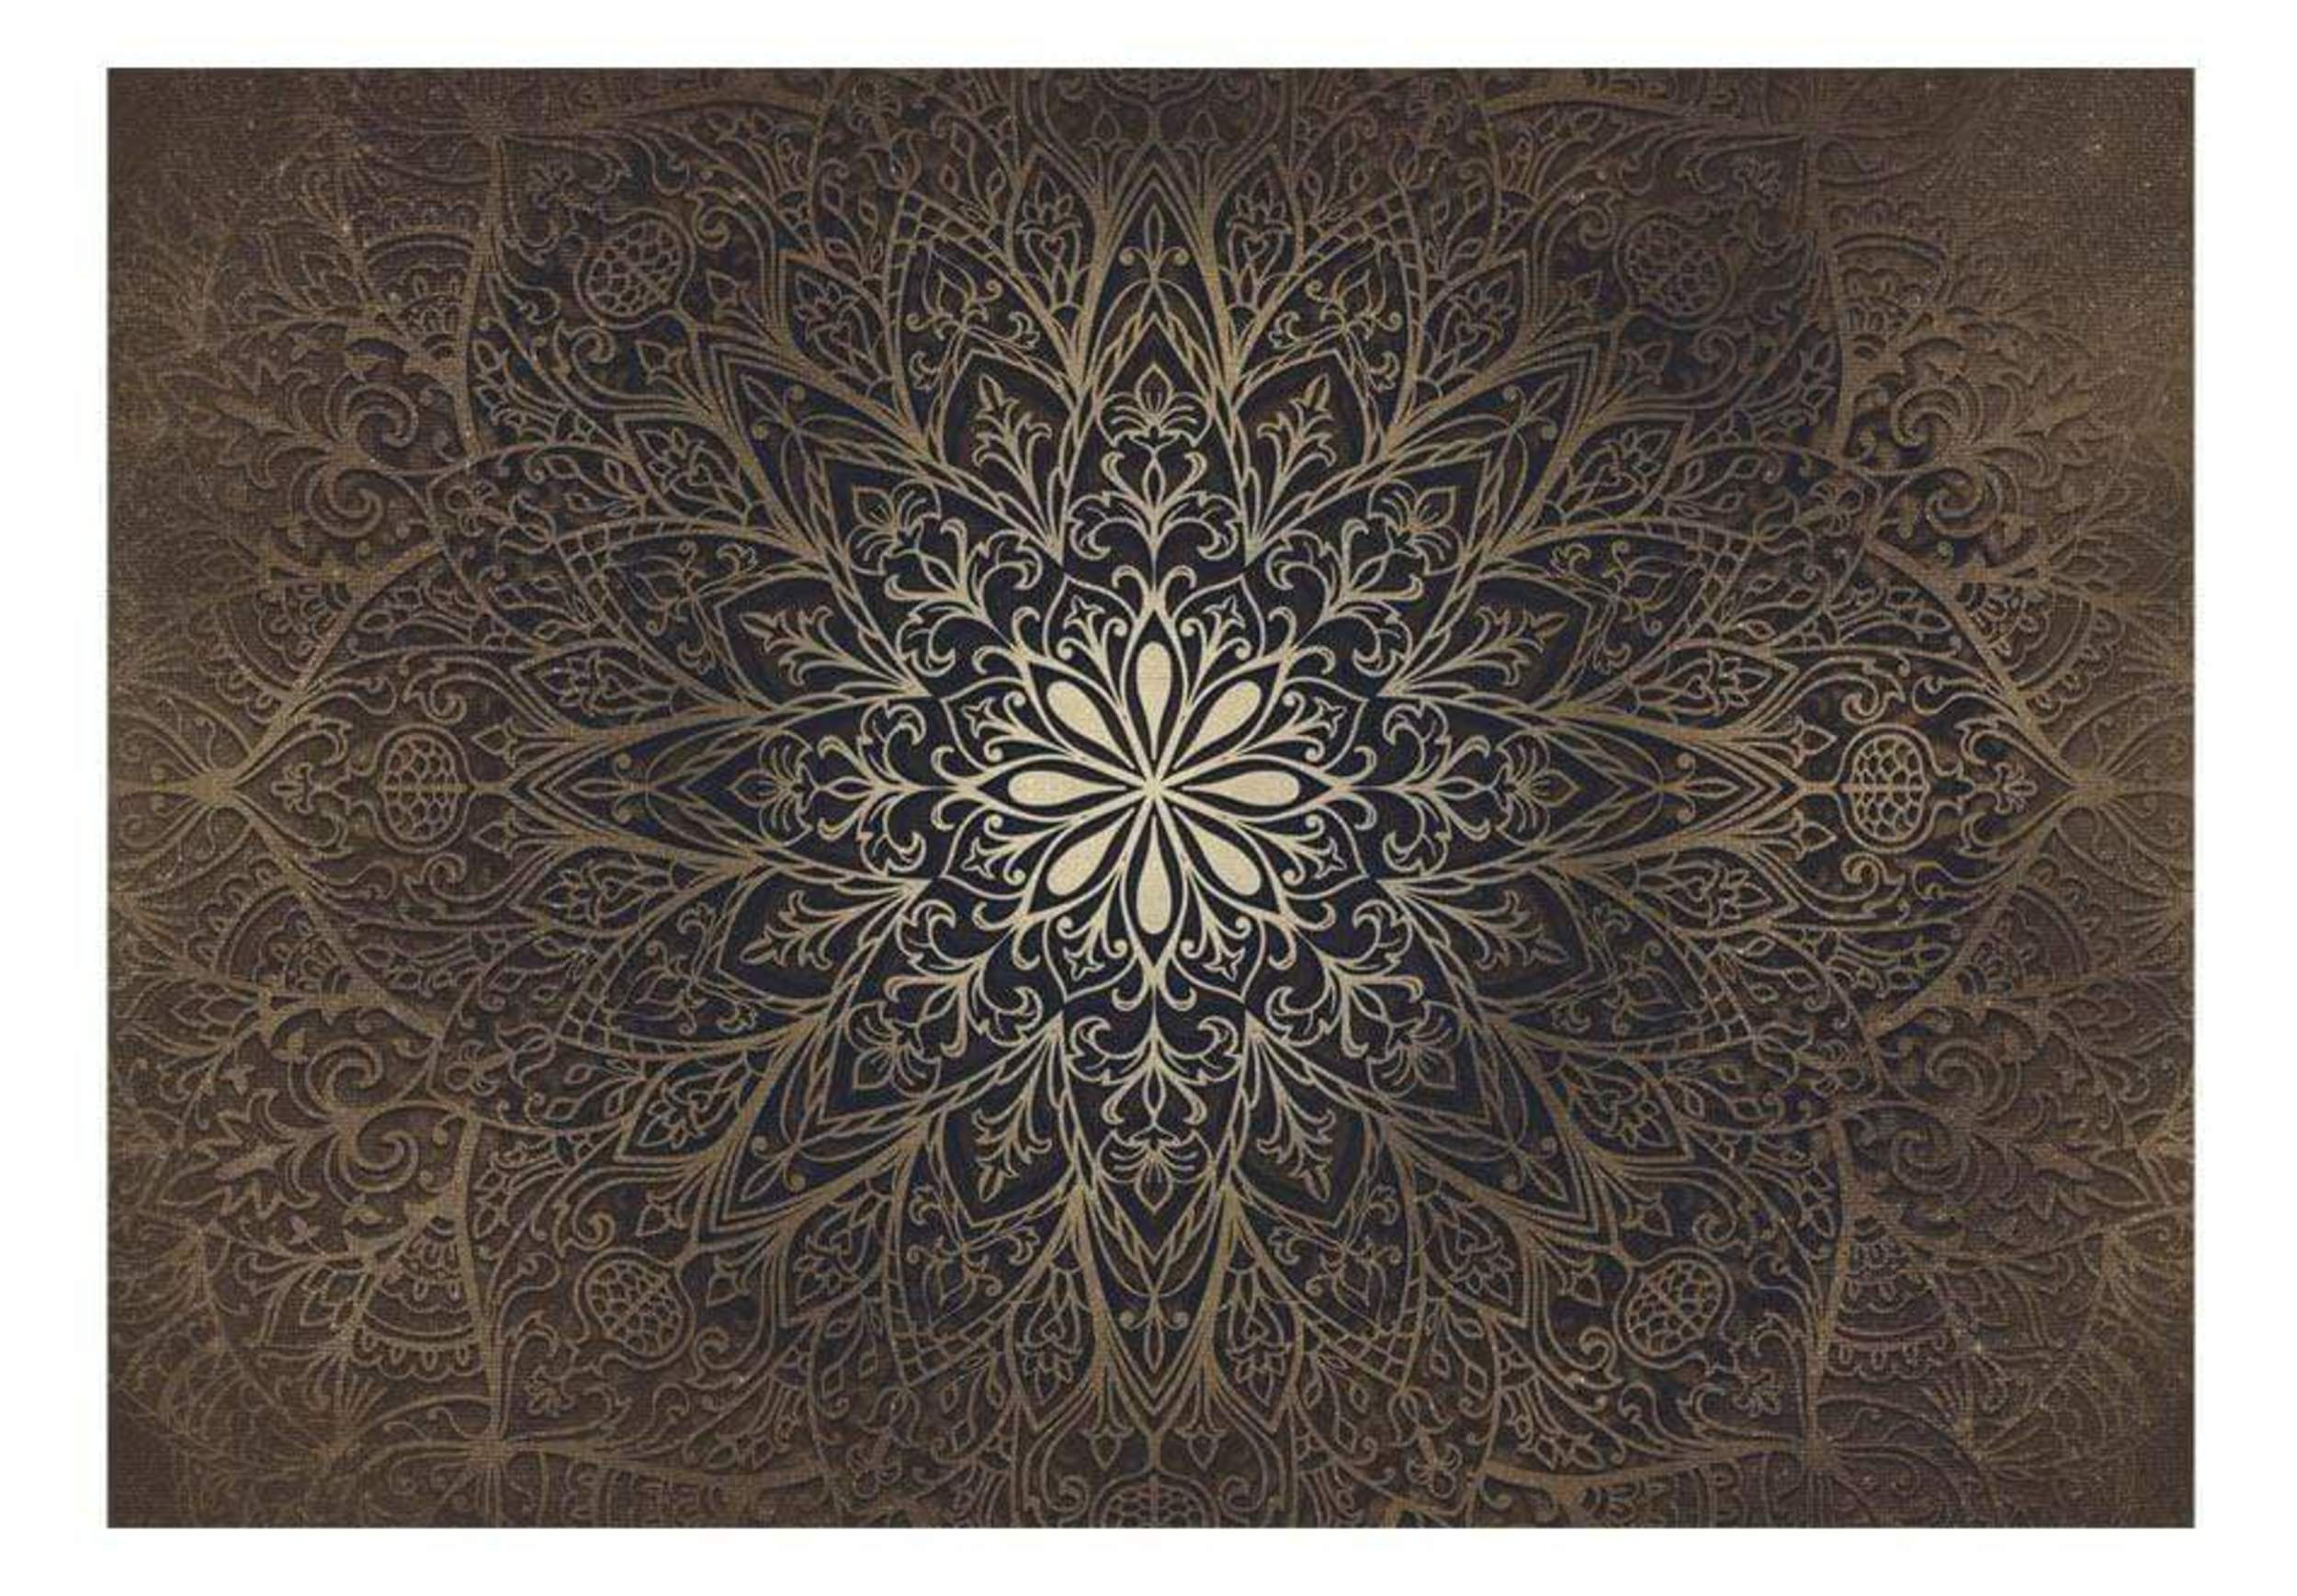 Fotobehang - Mandala 100x70cm - Vliesbehang